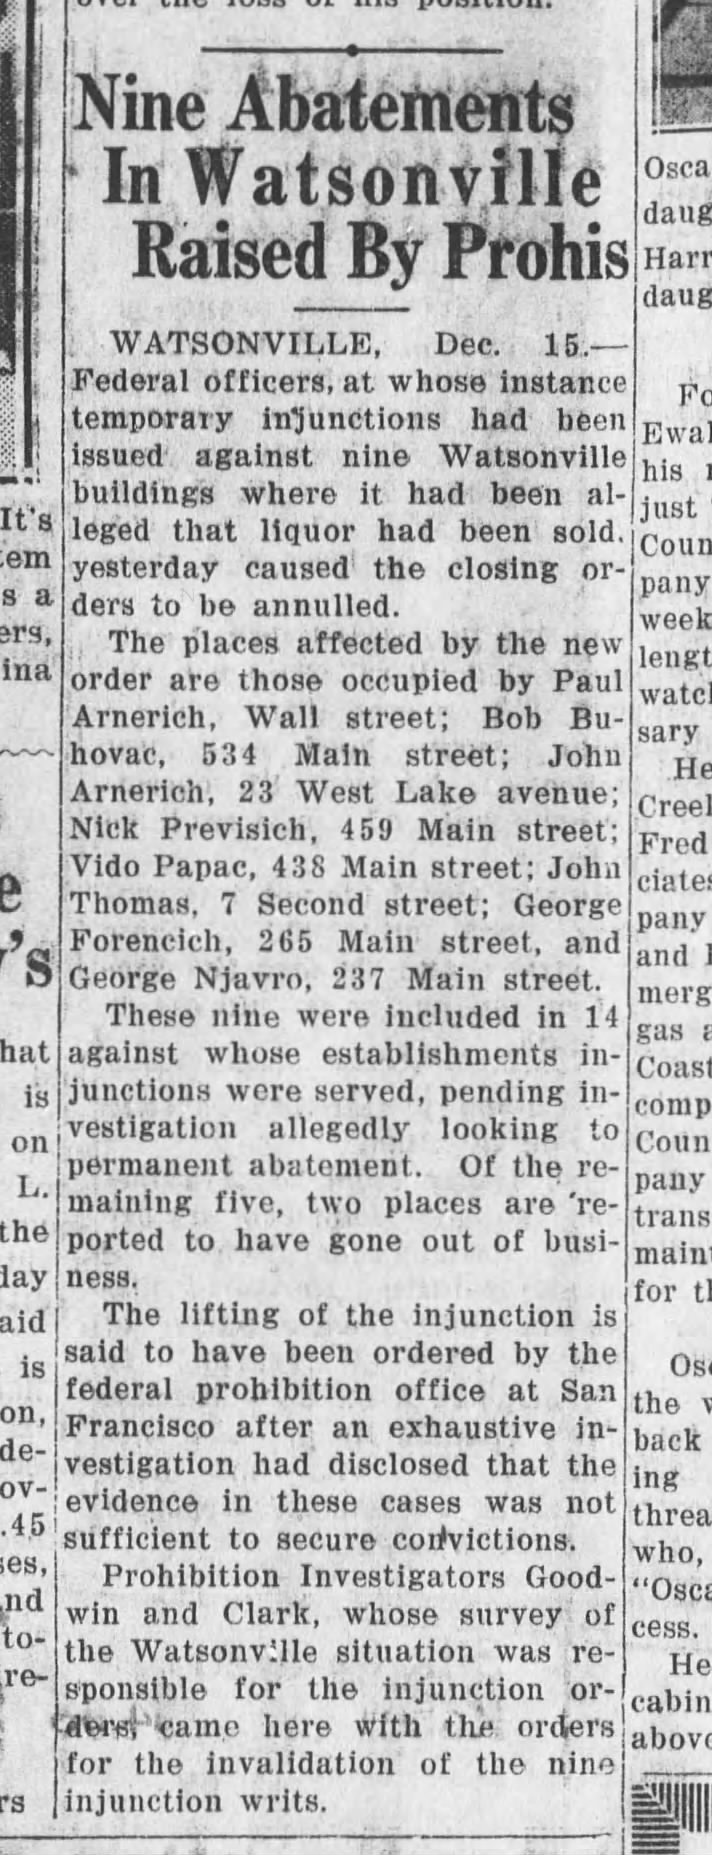 Santa Cruz Evening News, 15 December 1931, Page 4, Column 4